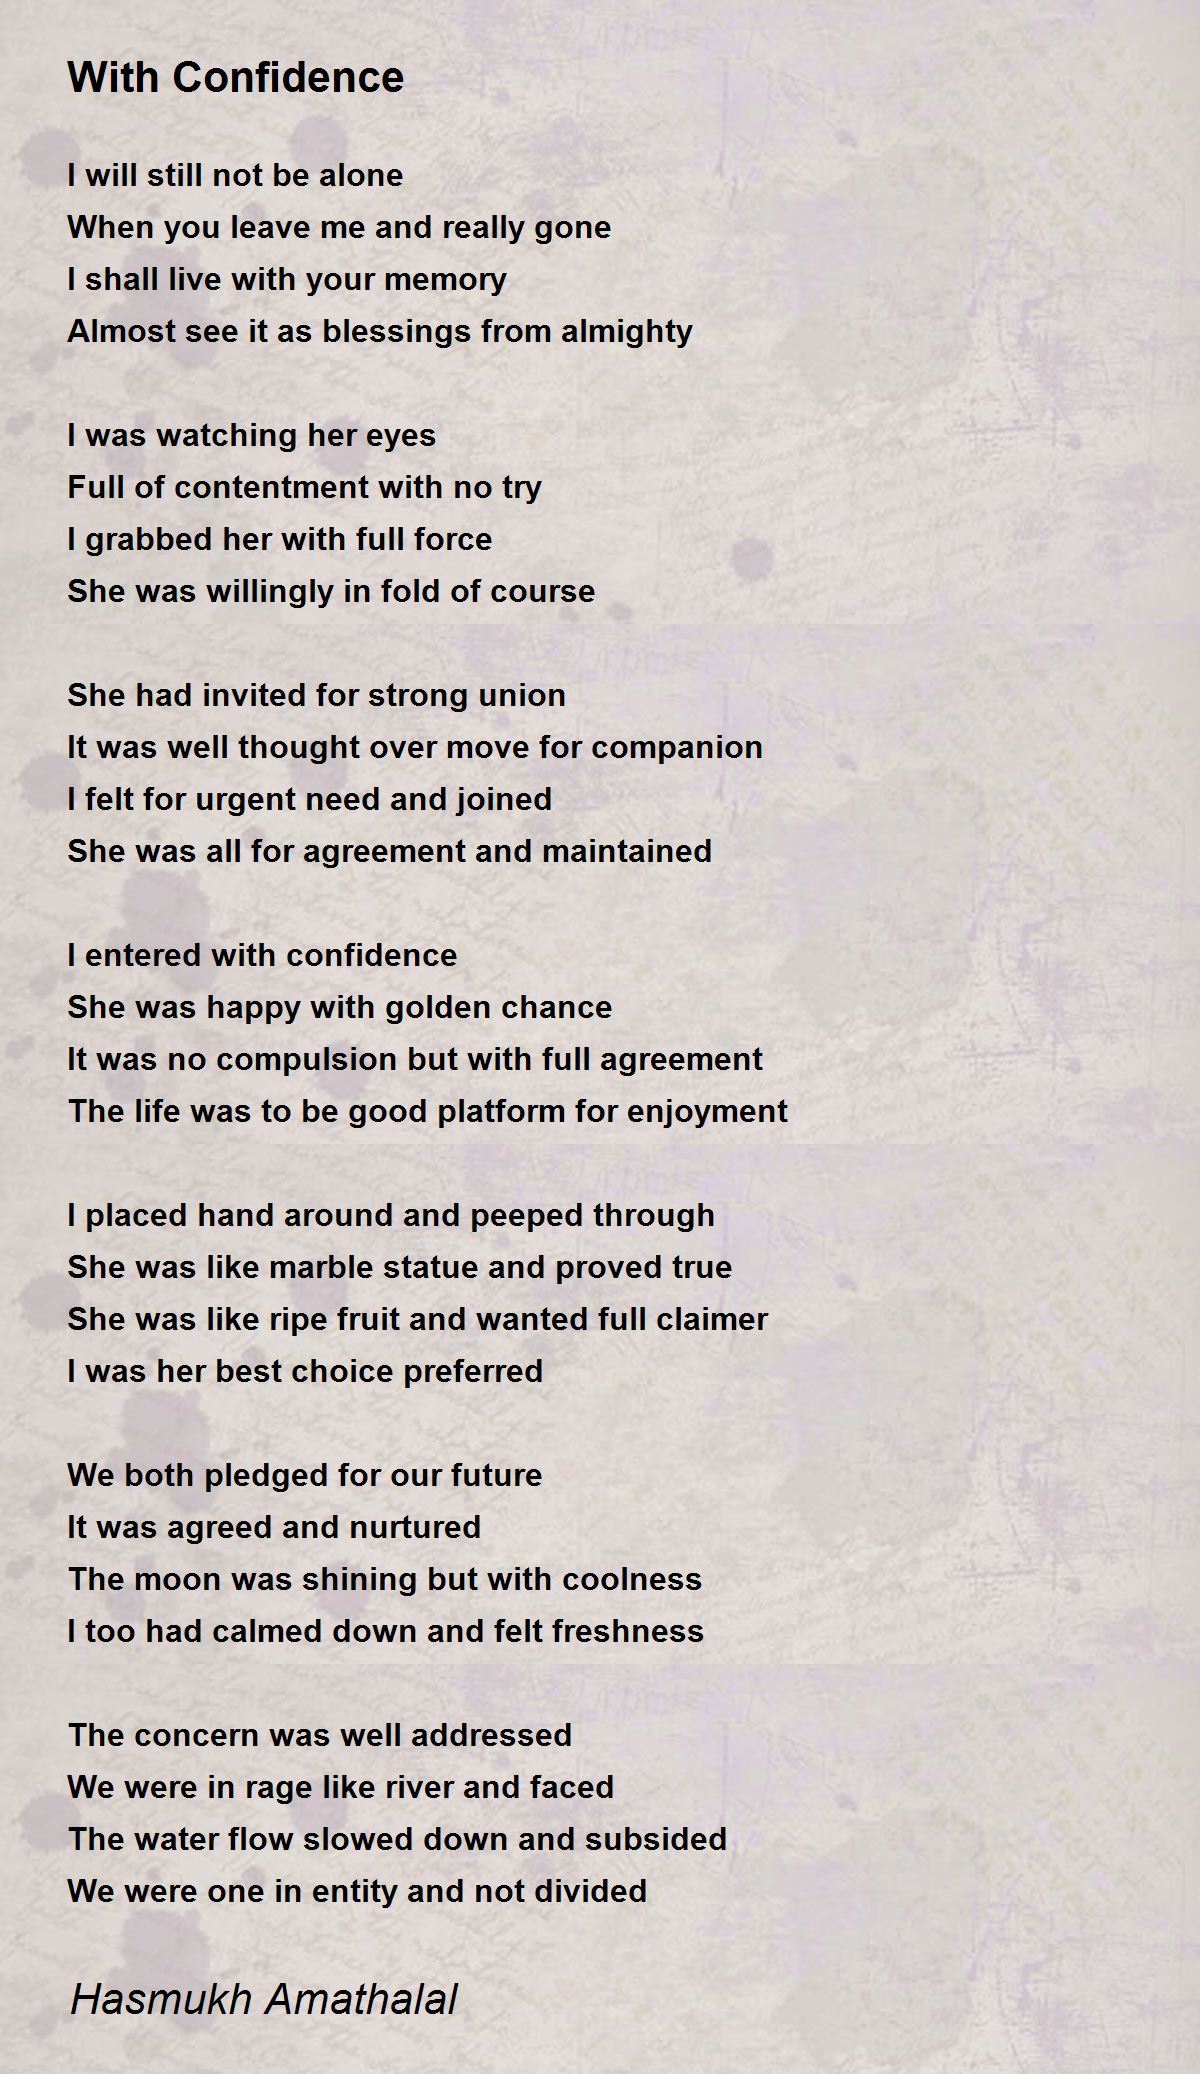 With Confidence Poem by Mehta Hasmukh Amathalal - Poem Hunter